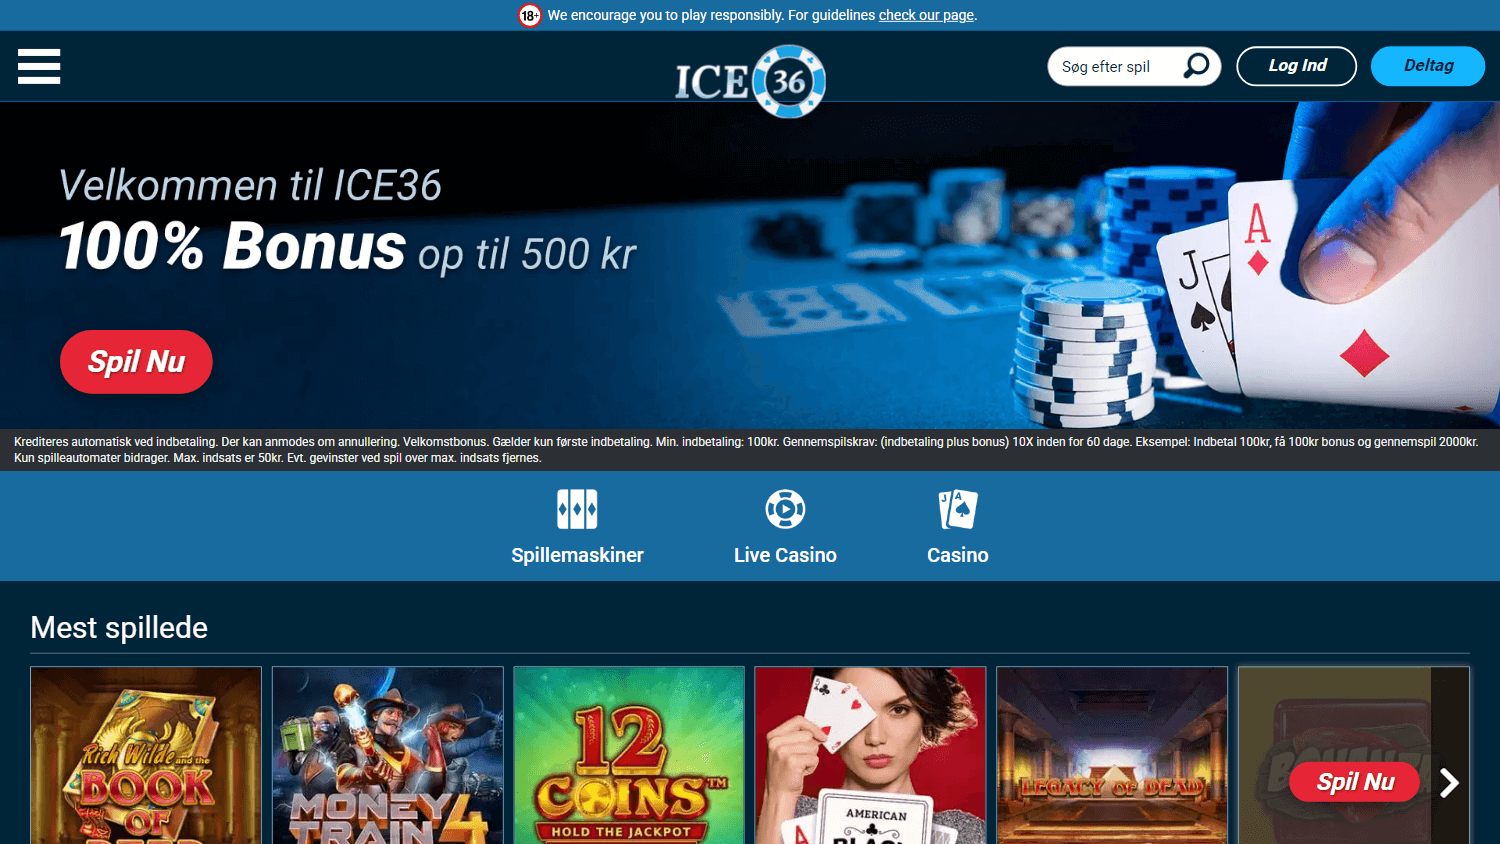 ice36_casino_dk_homepage_desktop